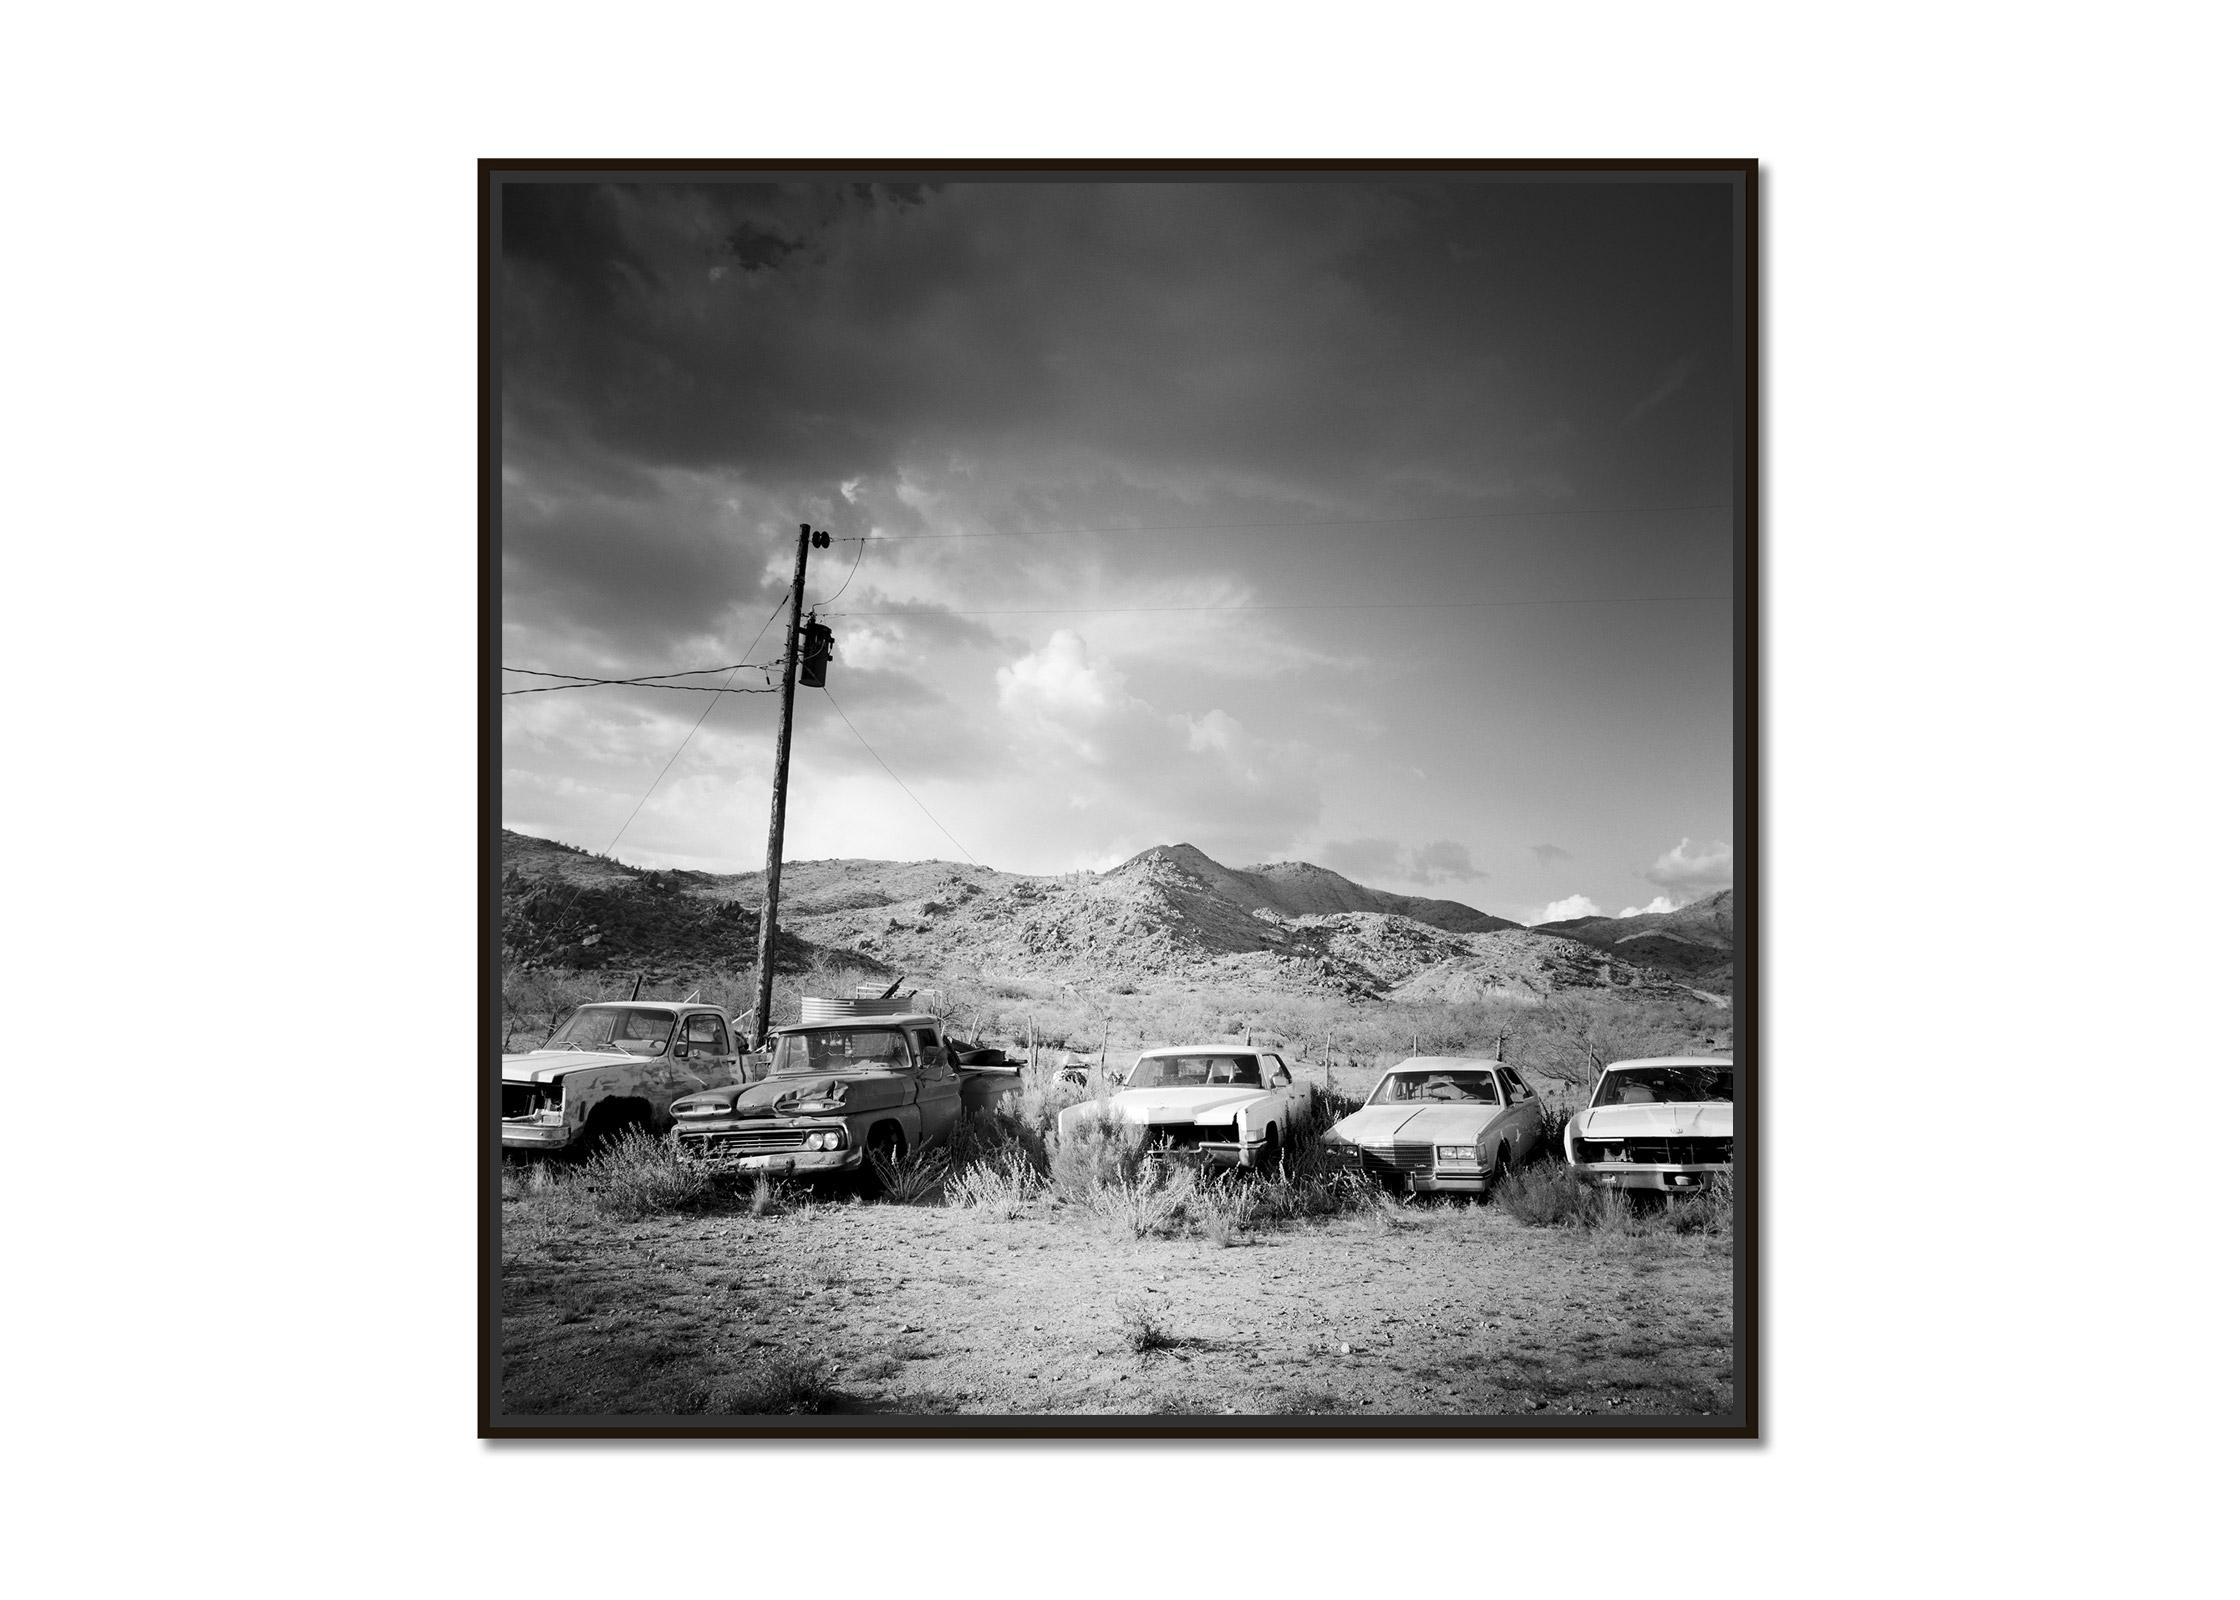 Junkyard, Desert, Route 66, Arizona, USA, black and white photography, landscape - Photograph by Gerald Berghammer